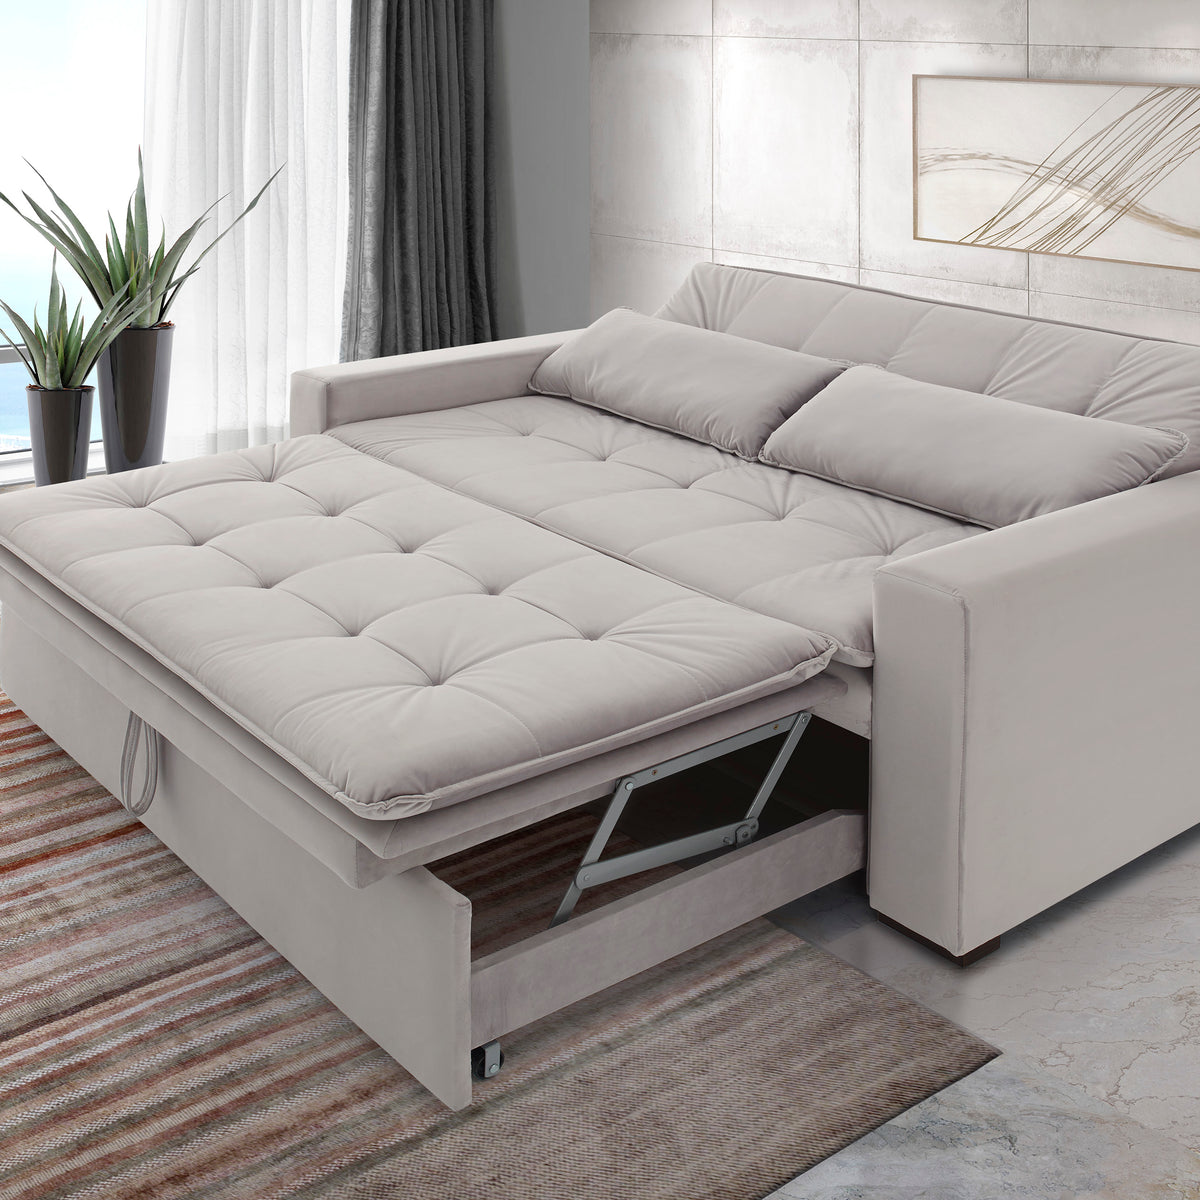 Beds Decora - Sofa Re US